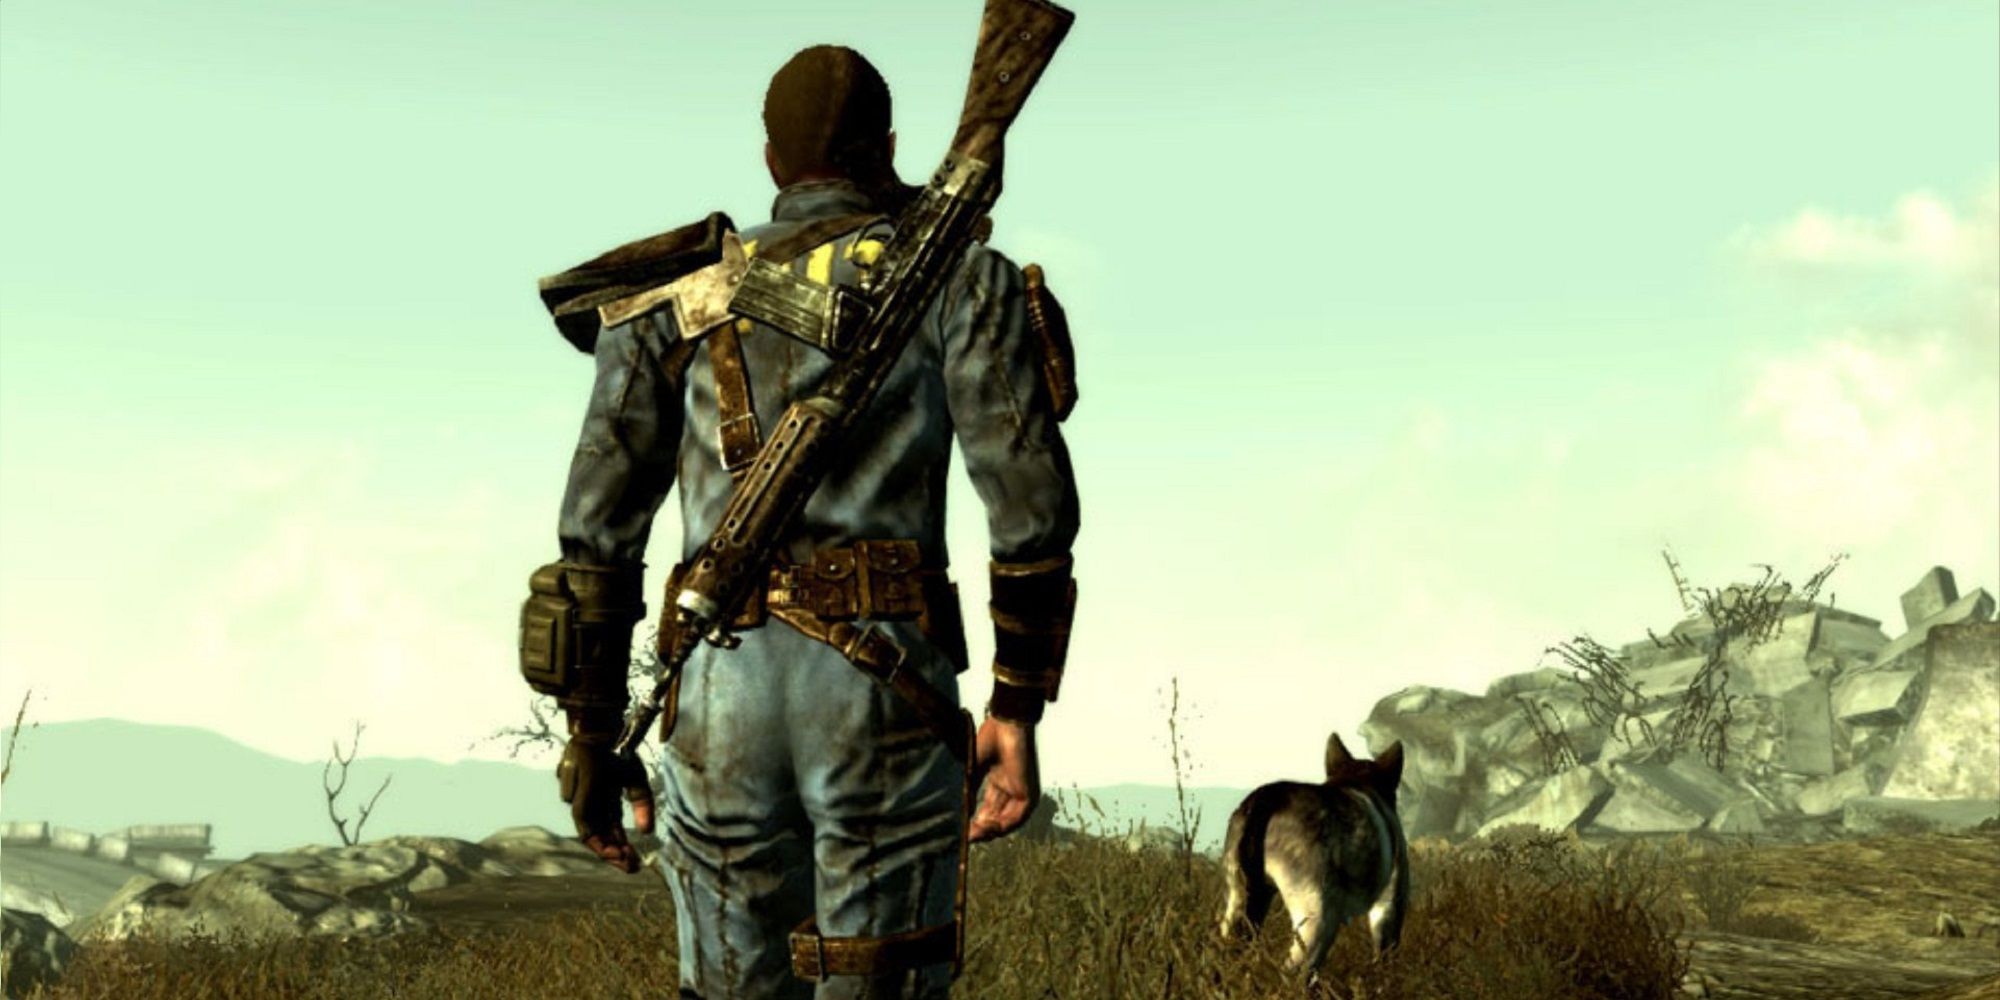 Top 10 Fallout 3 mods